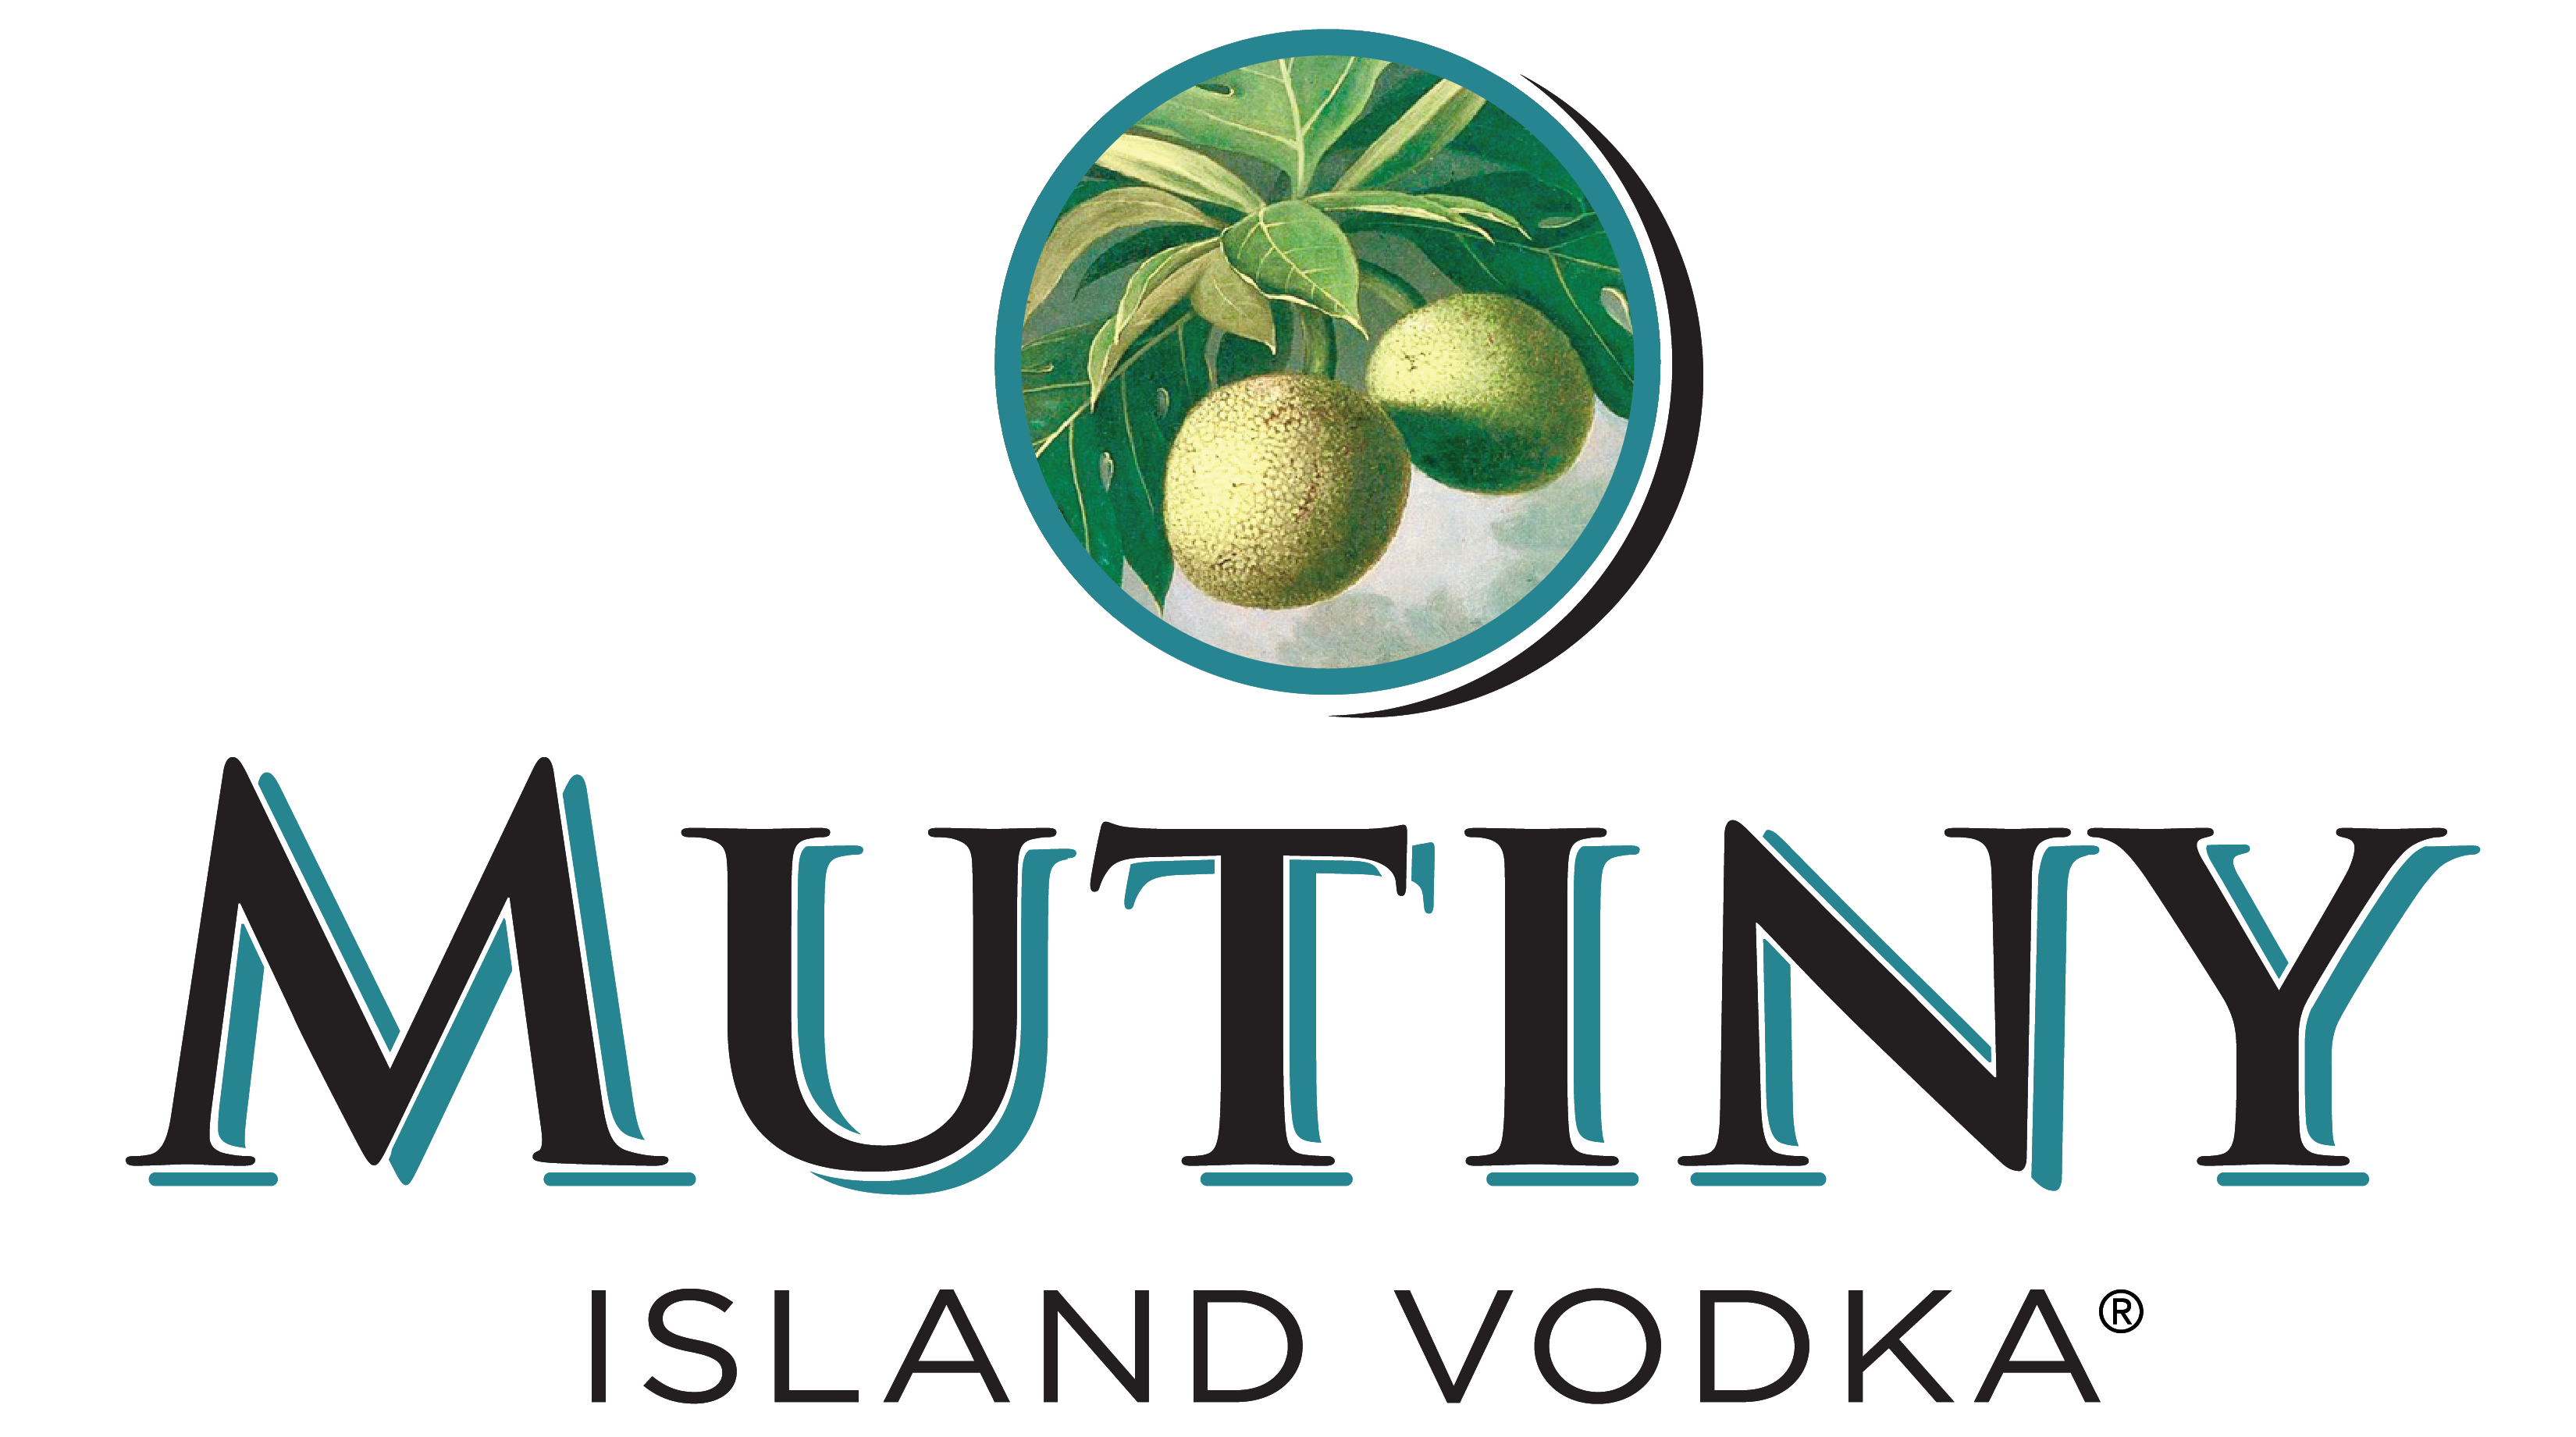 Mutiny Island Vodka